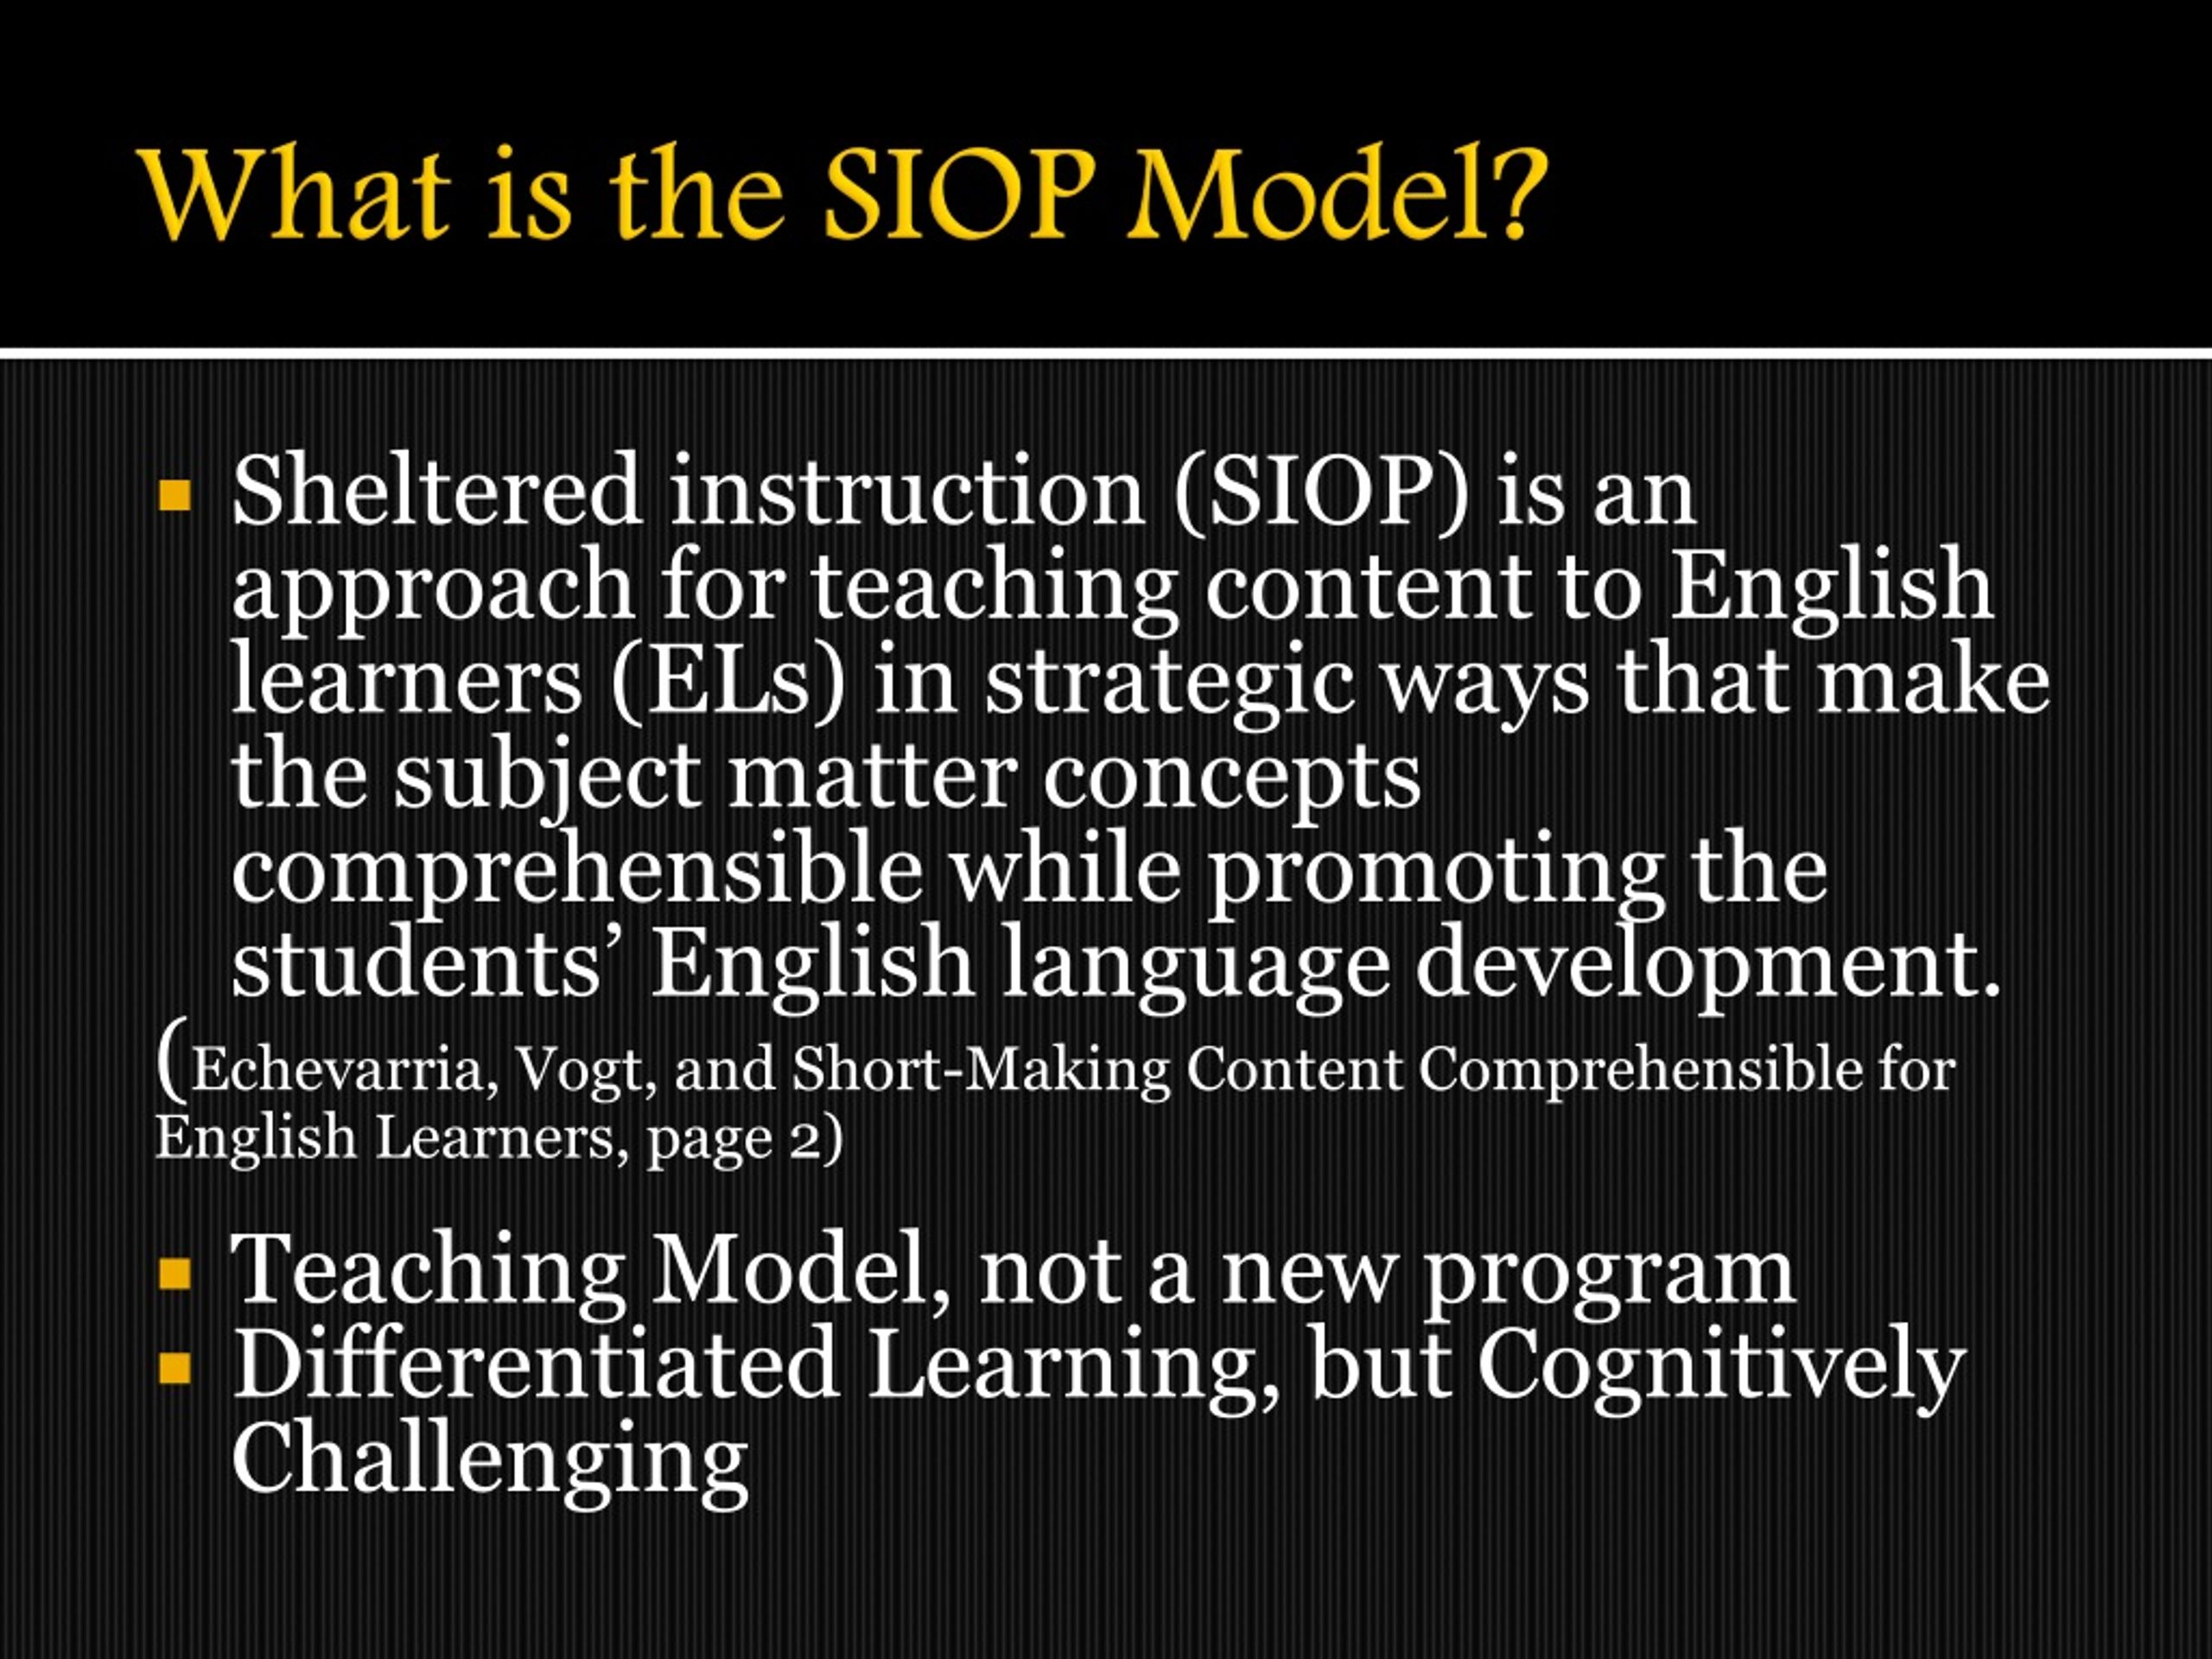 siop model powerpoint presentation